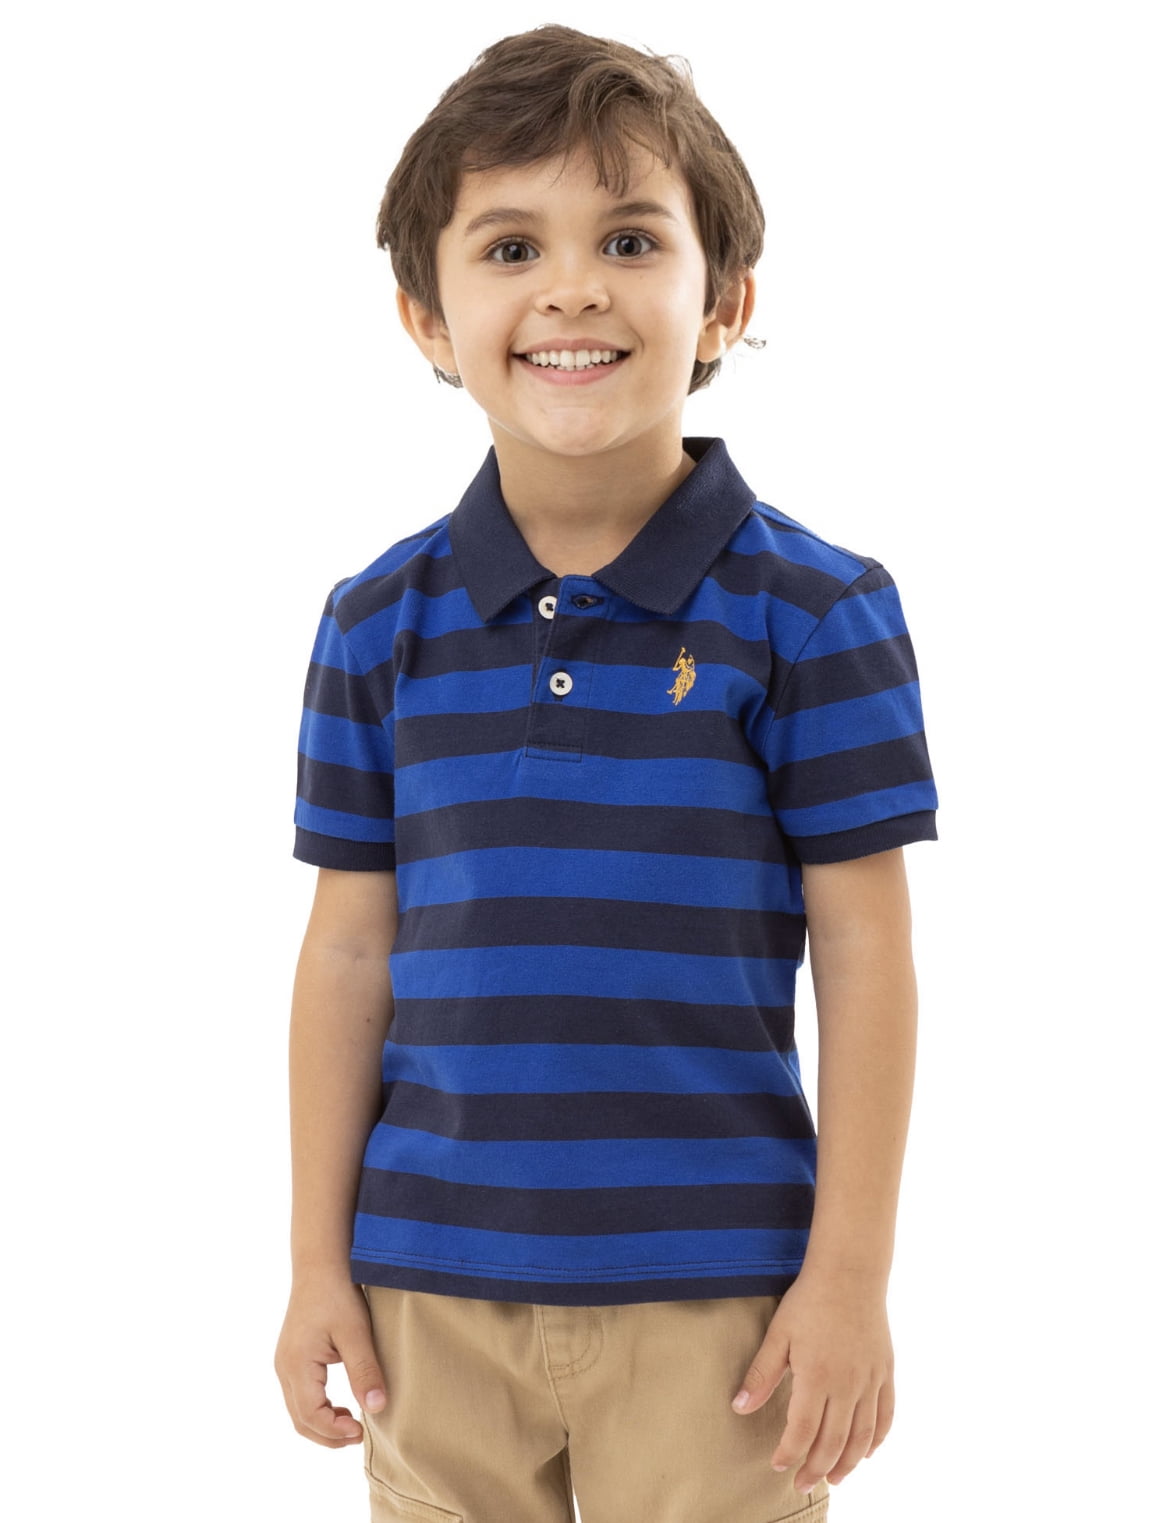 U.S. Polo Assn. Toddler Boy Striped Polo, Sizes 2T-5T - Walmart.com